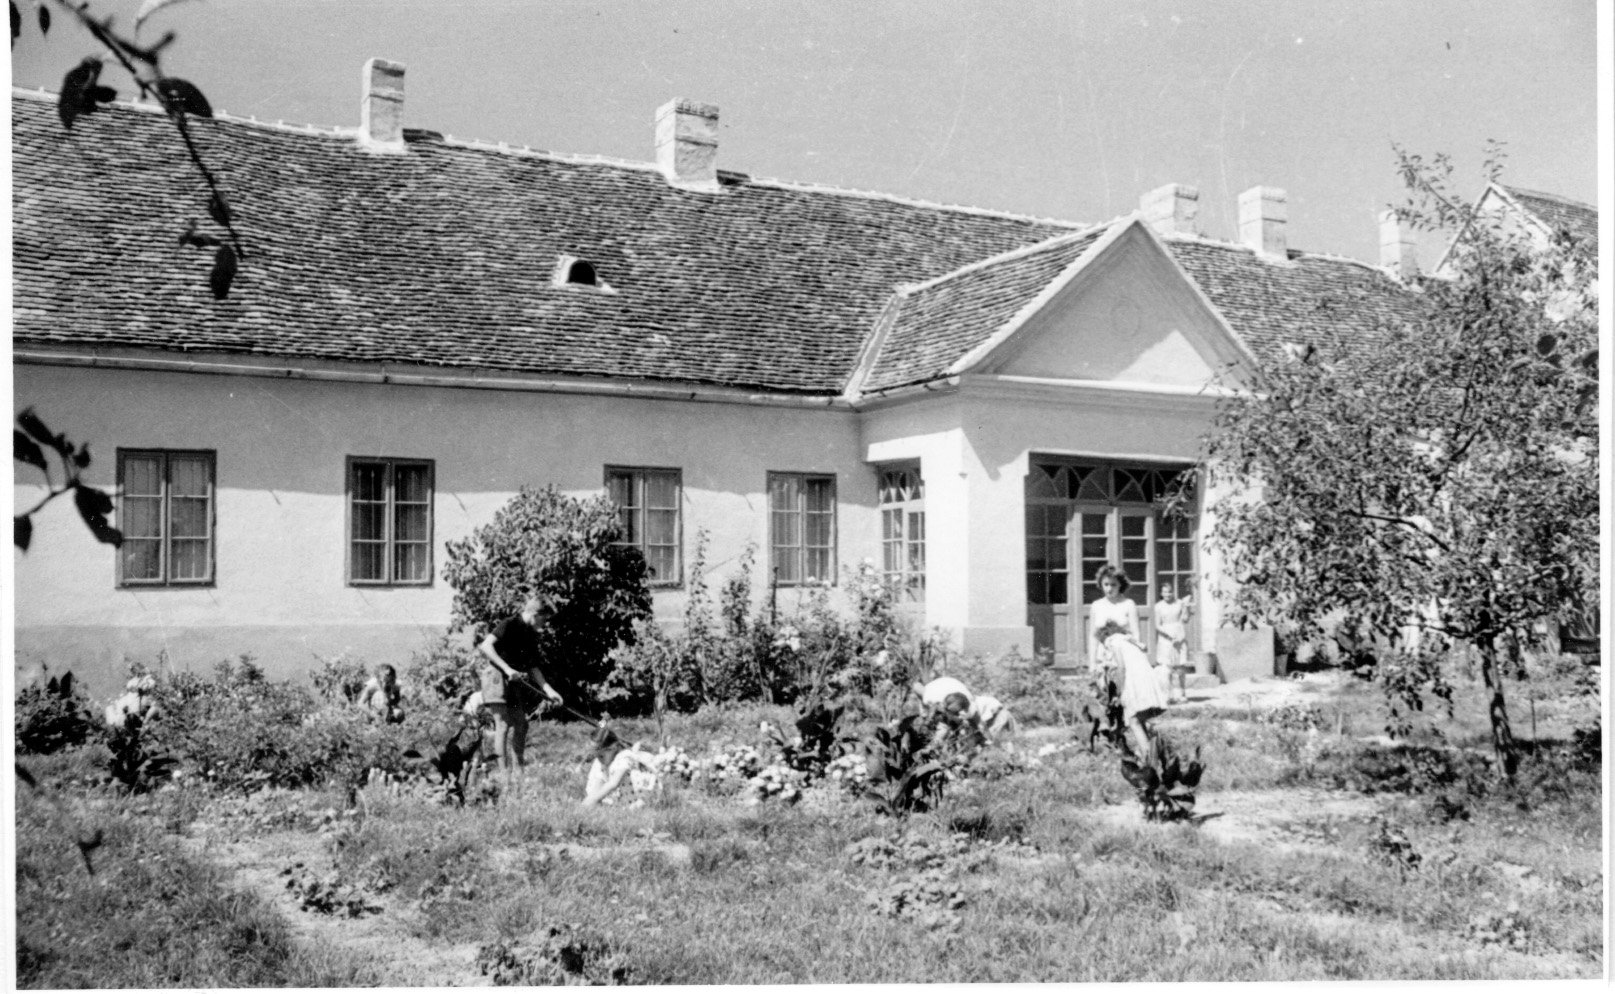 Kutaskozmai iskola virágos udvara (Rippl-Rónai Múzeum CC BY-NC-SA)